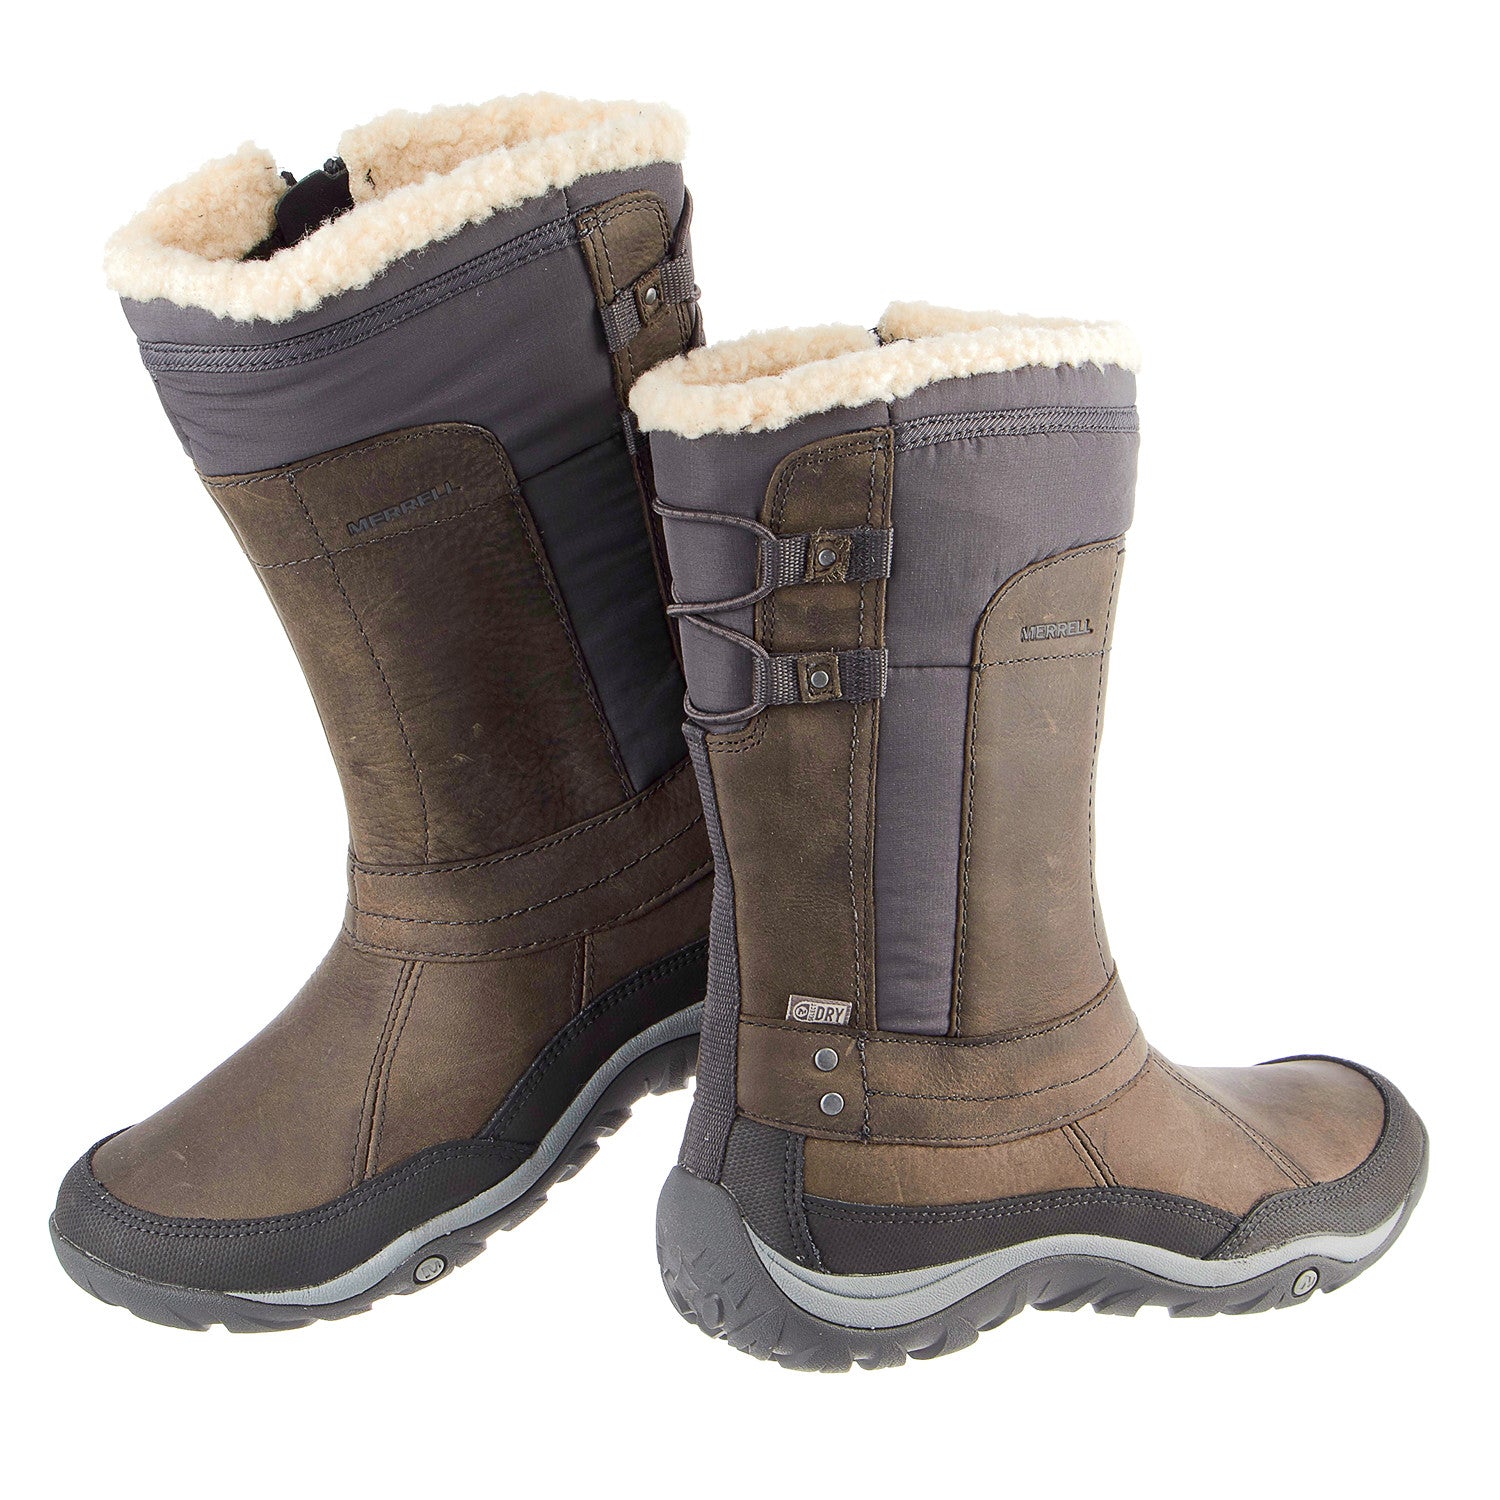 Merrell Waterproof Full Grain Leather Boots | lupon.gov.ph